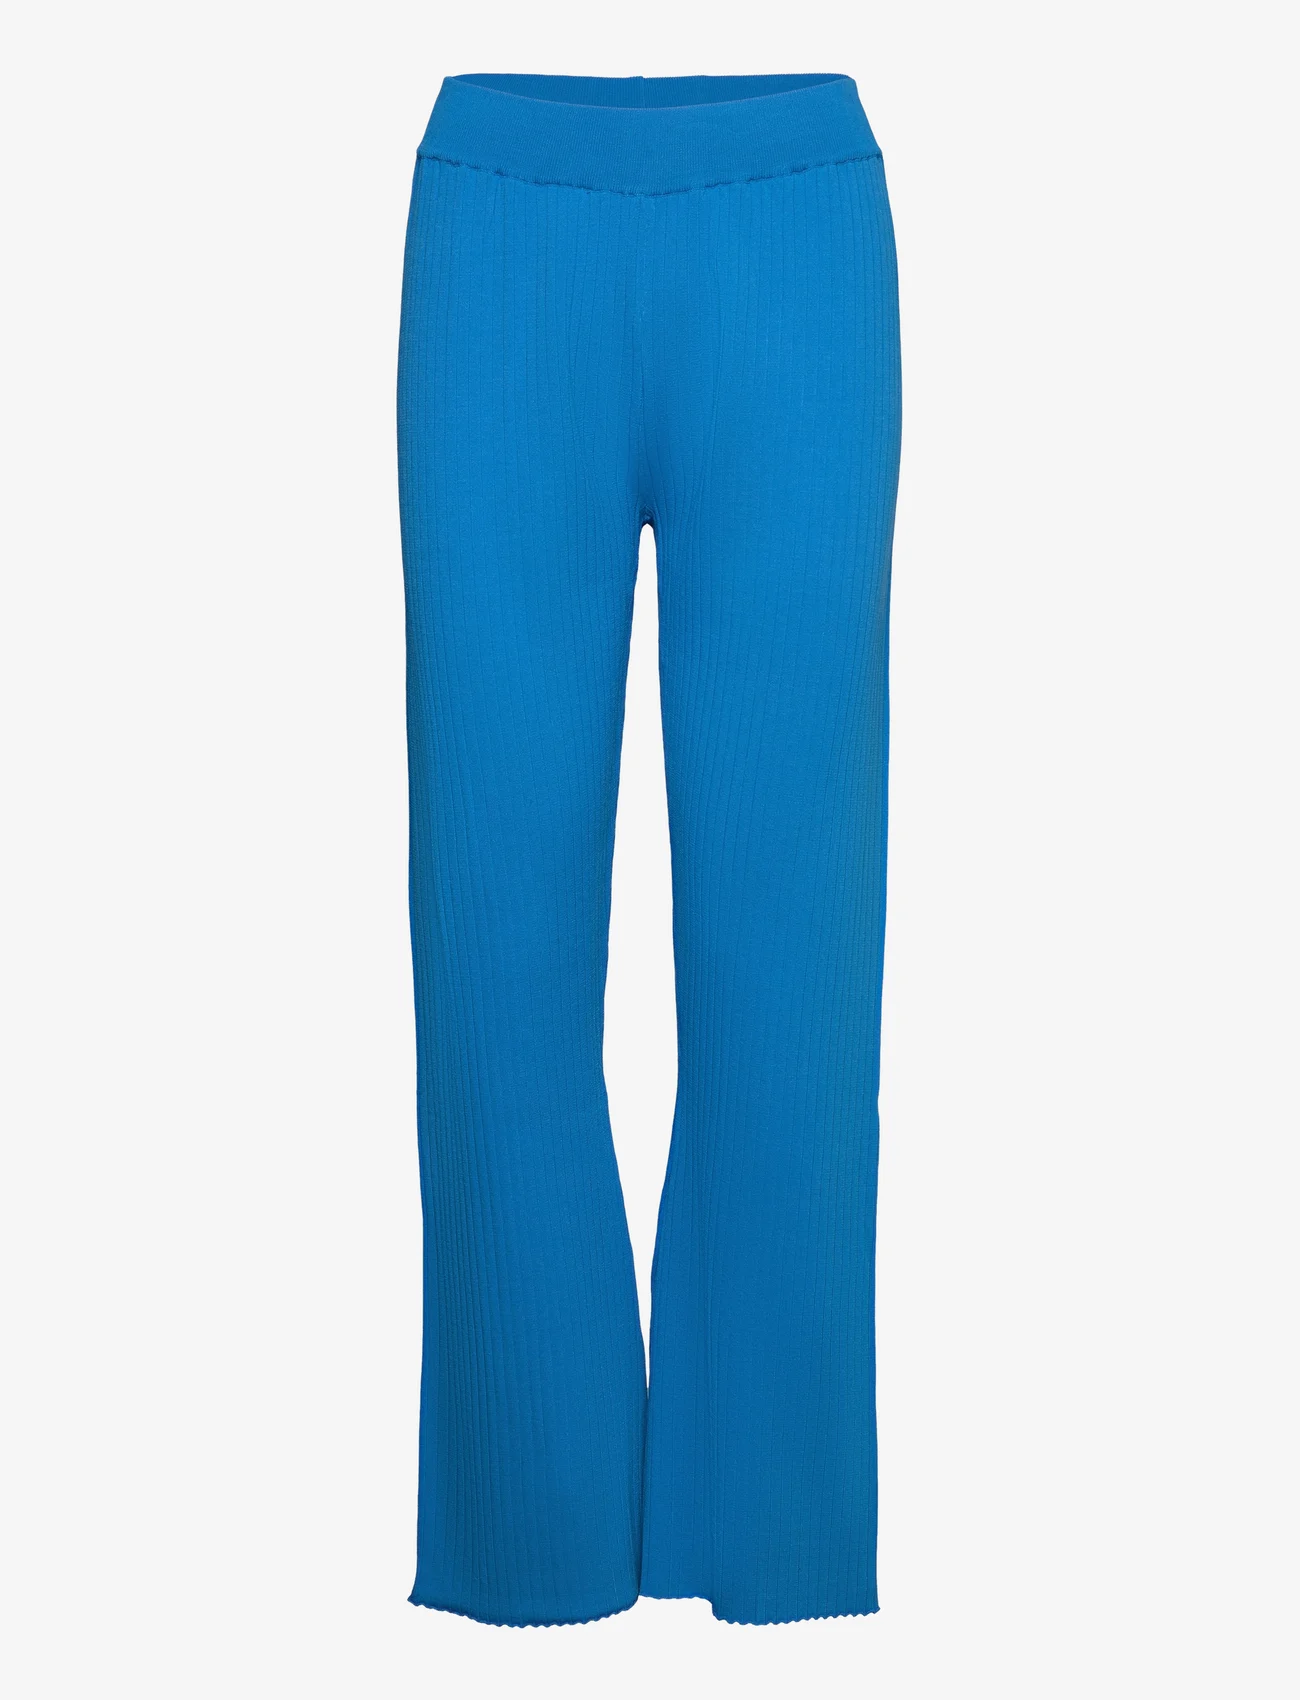 Just Female - Fresh pants - joggers copy - malibu blue - 0